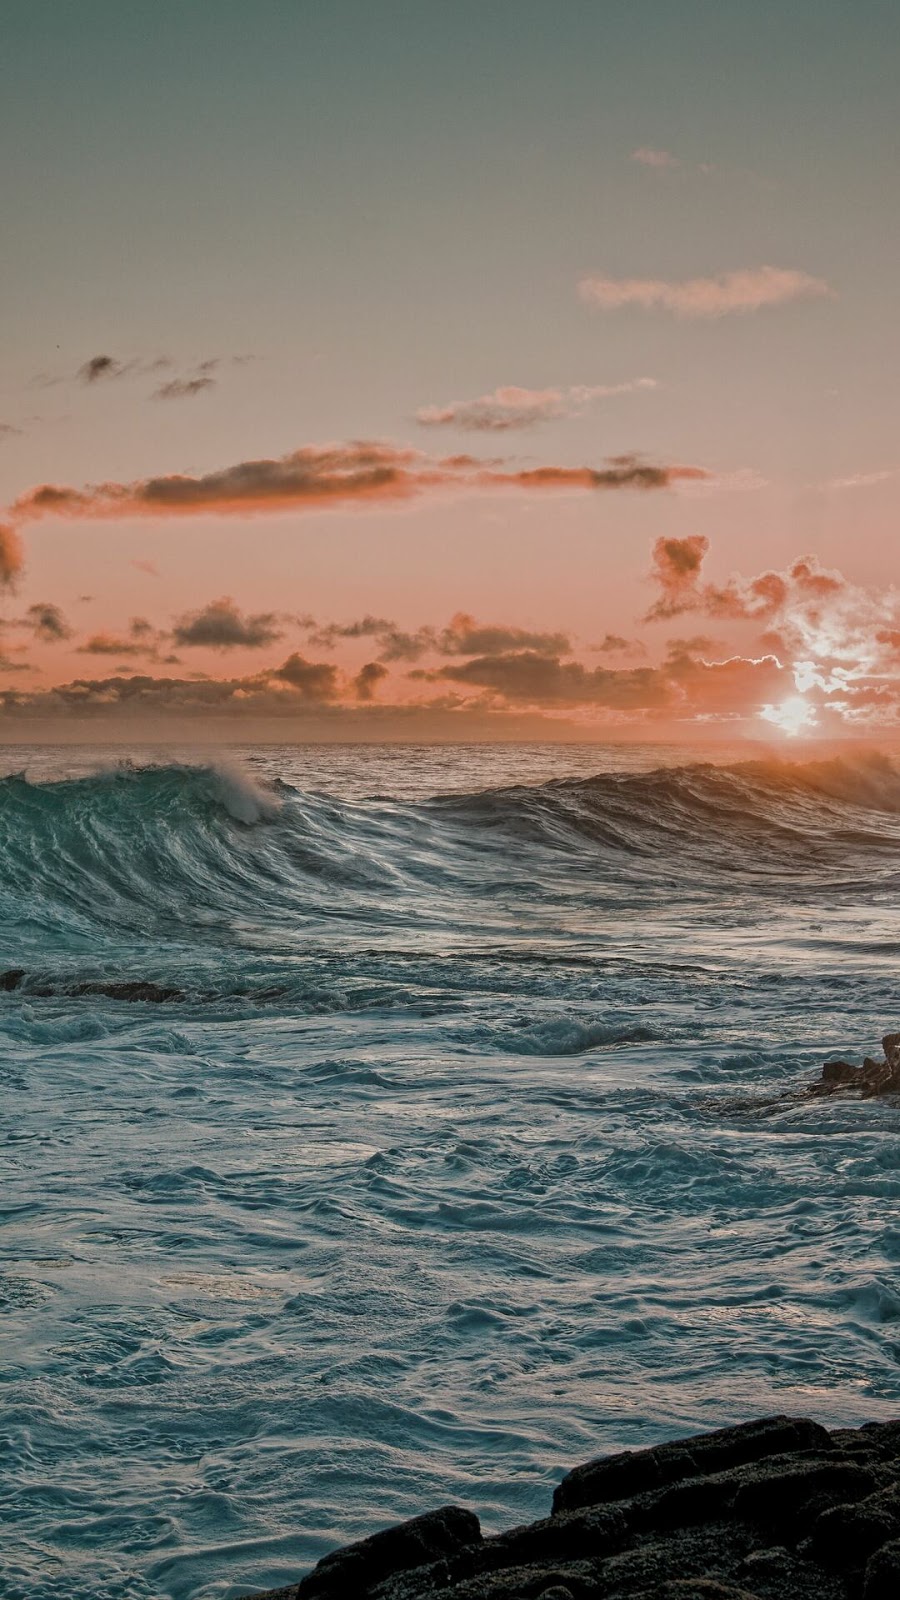  Download Wallpaper Amazing Ocean Sunset Waves, Hd, 4k Images.